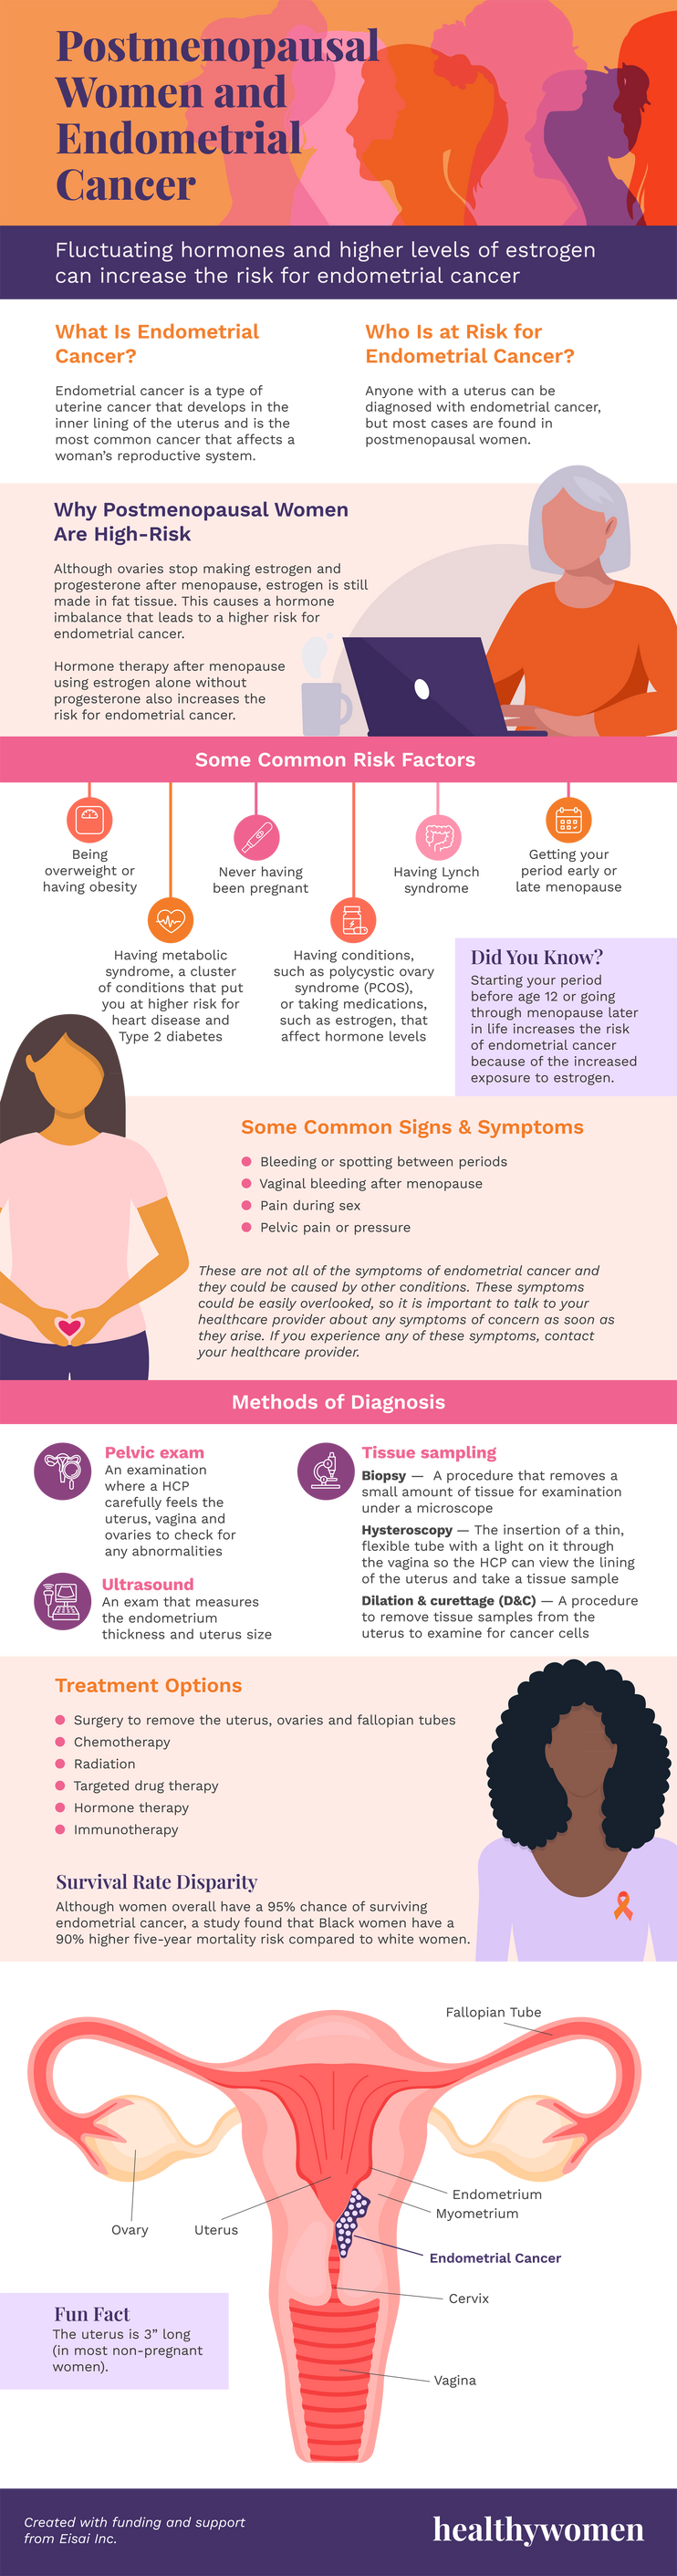 Postmenopausal Women and Endometrial Cancer - HealthyWomen